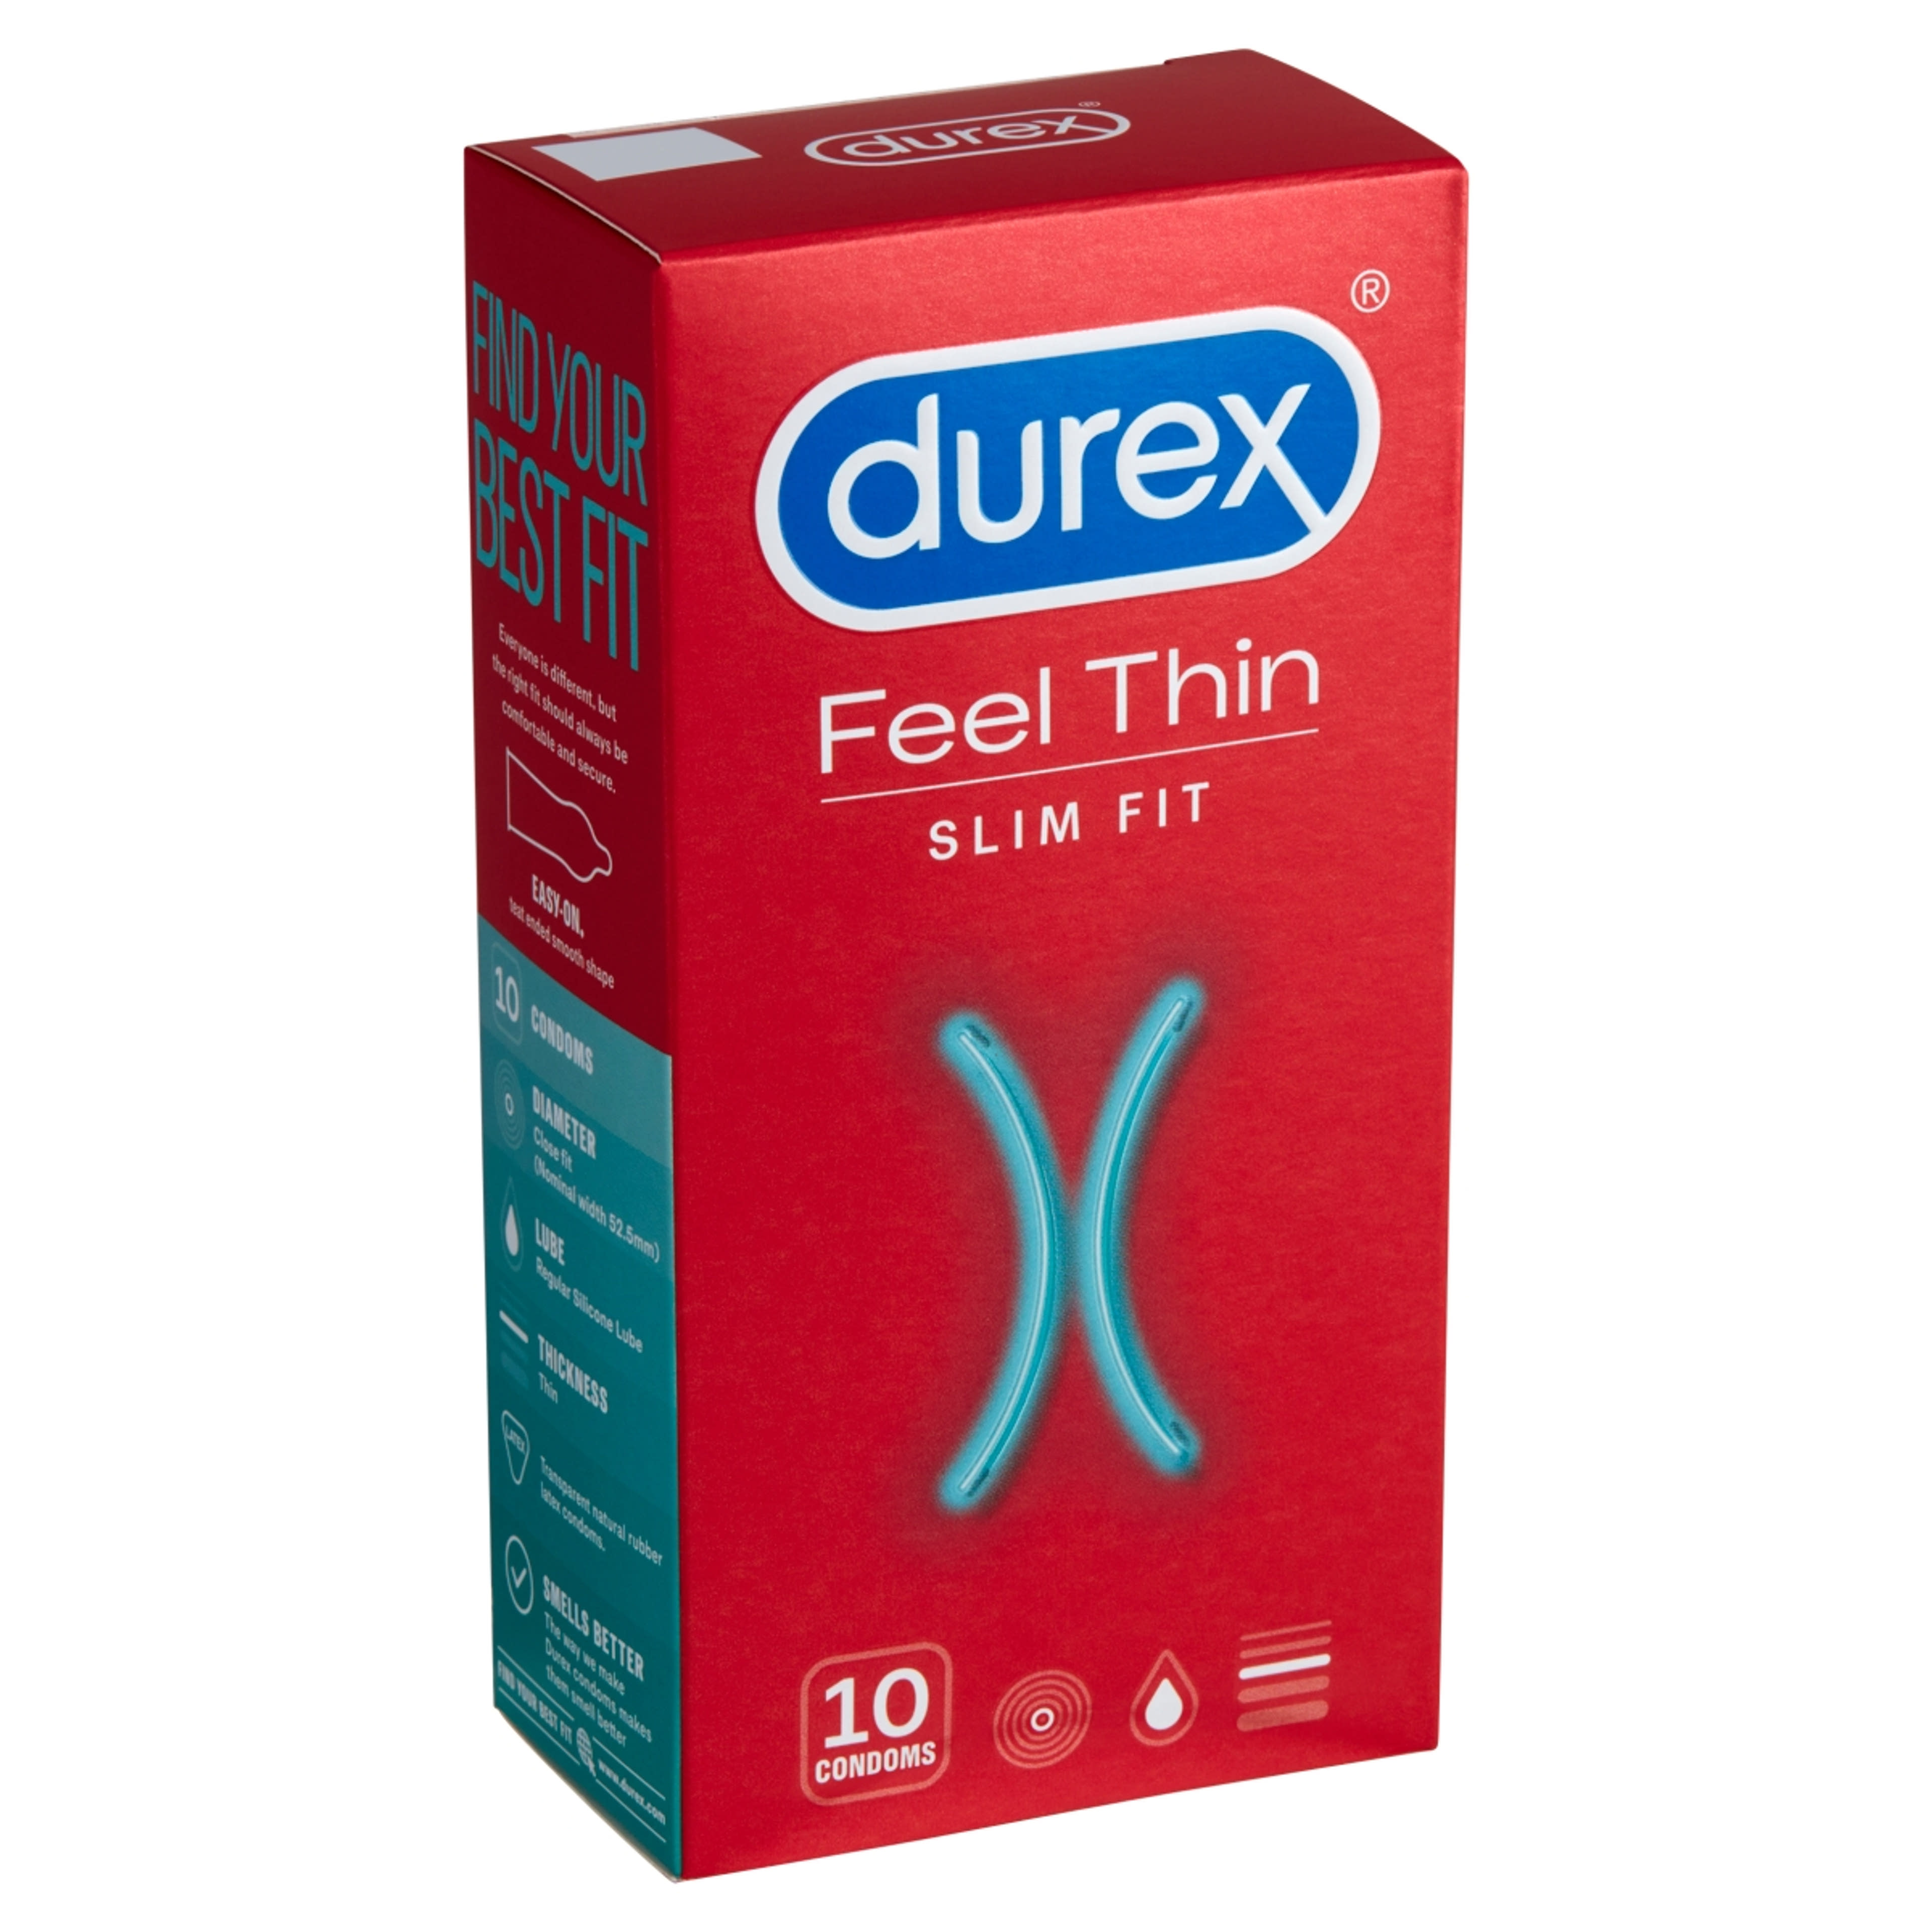 Durex óvszer feel thin slim fit - 10 db-2